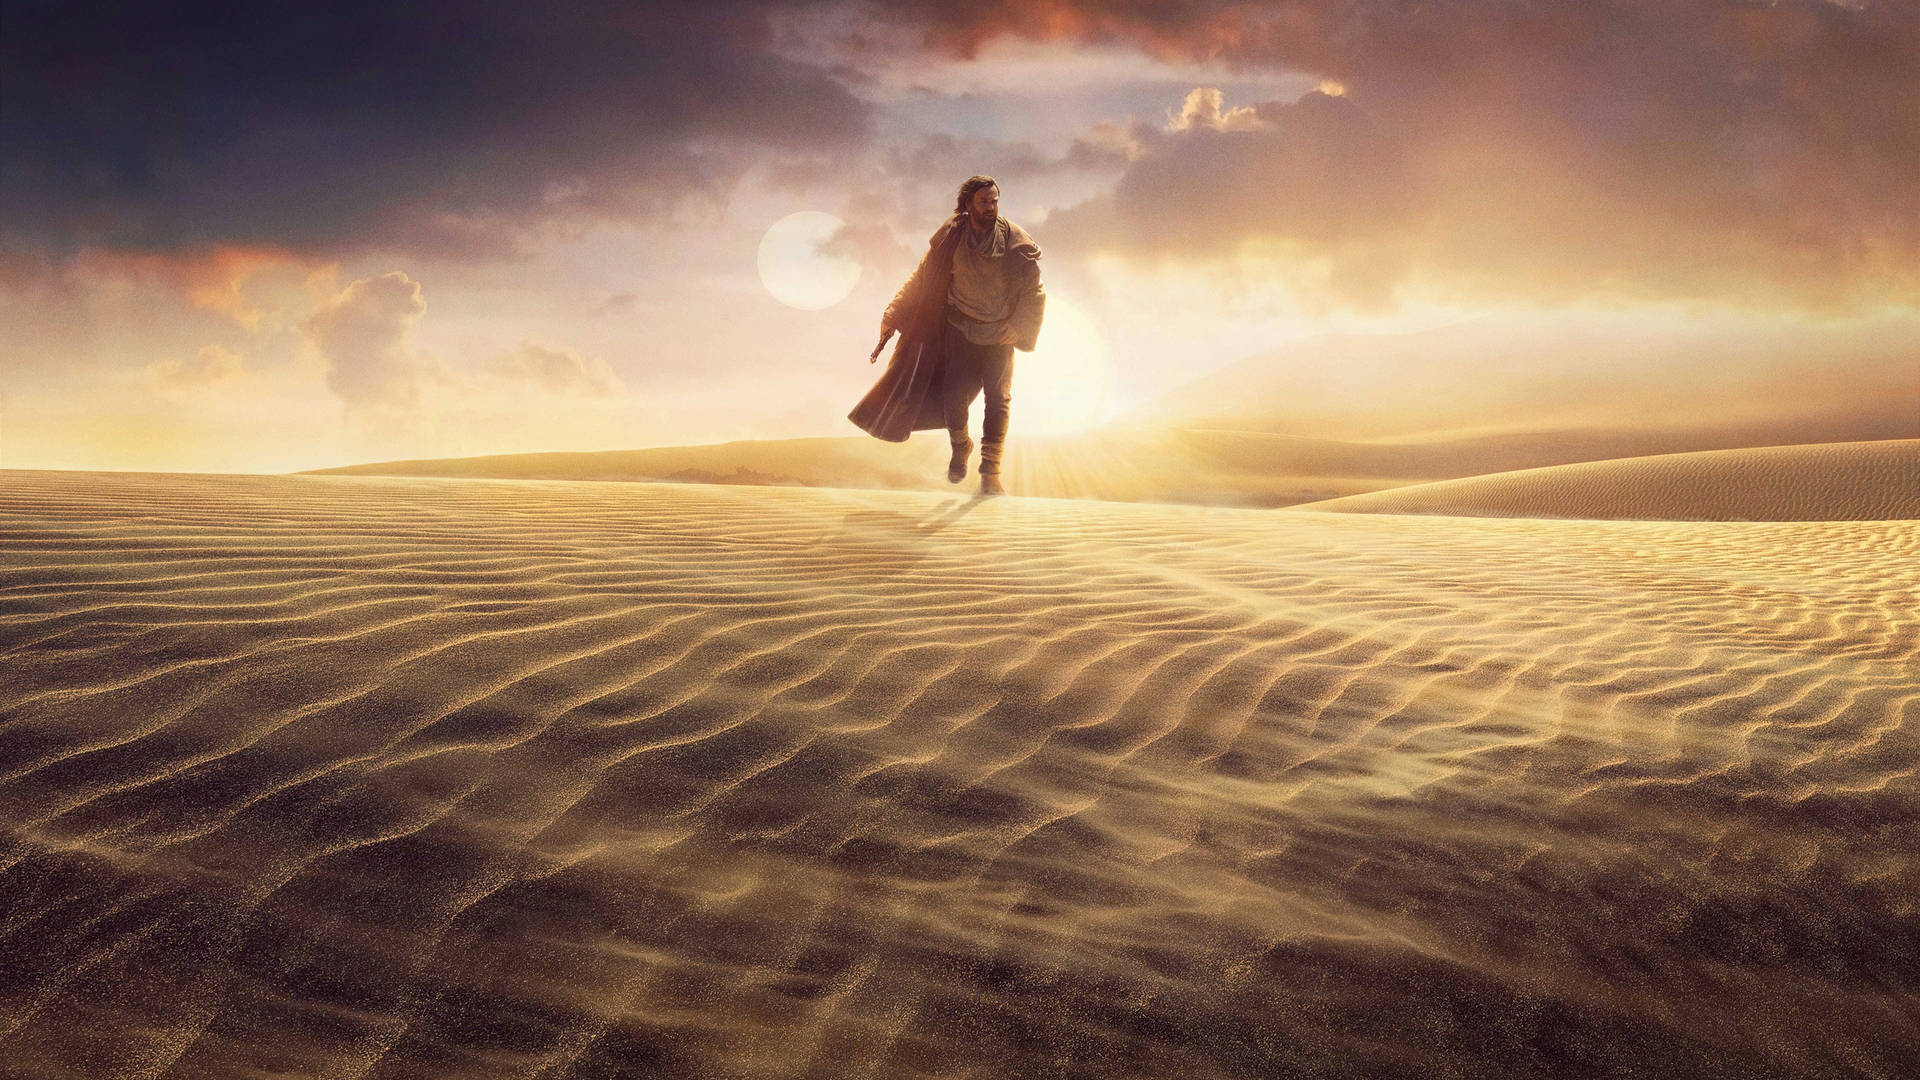 Obi Wan Kenobi Tatooine Desert